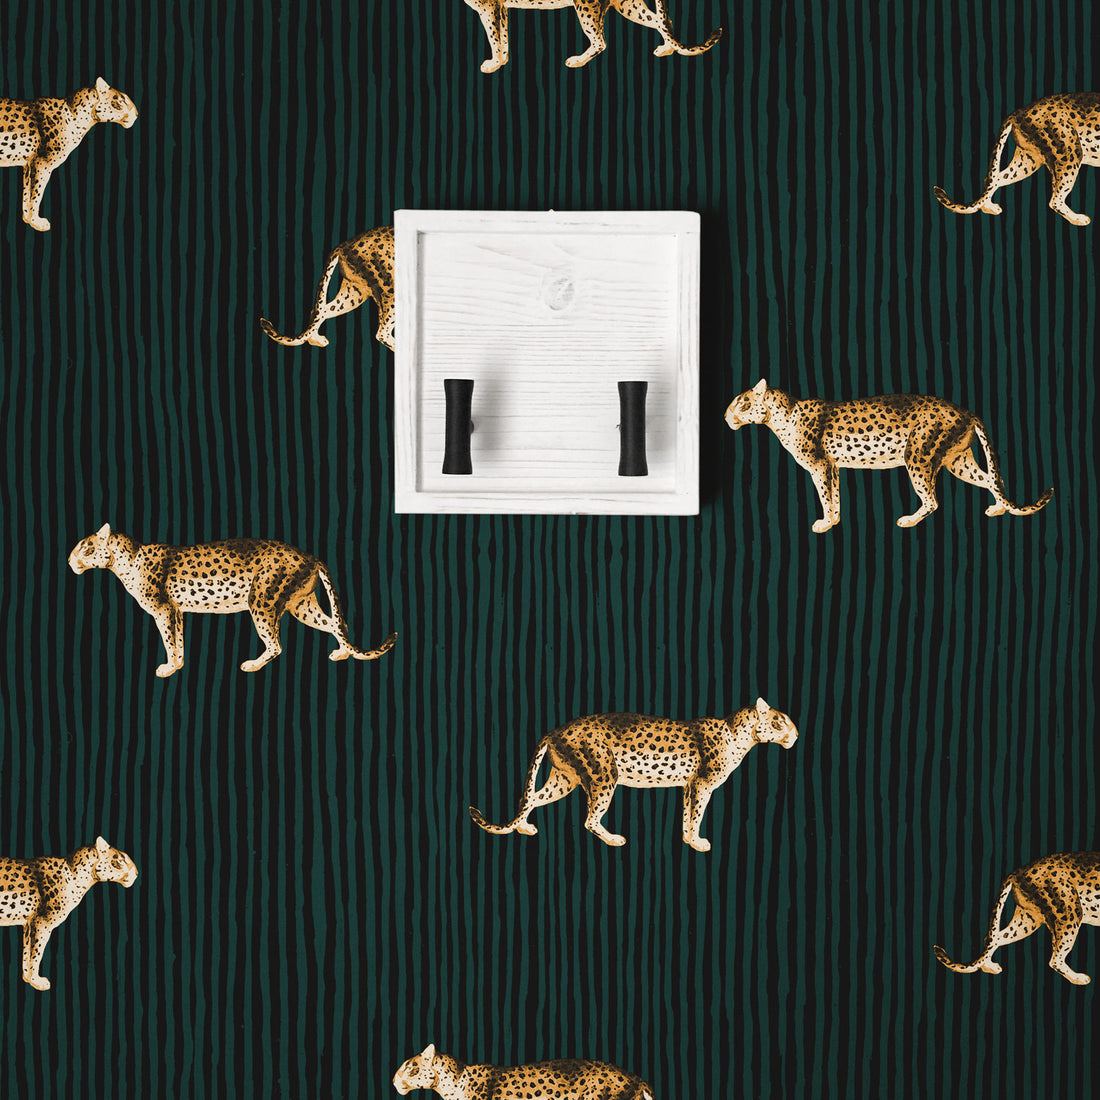 Animal Print Leopard Light Grey Peel and Stick Vinyl Wallpaper